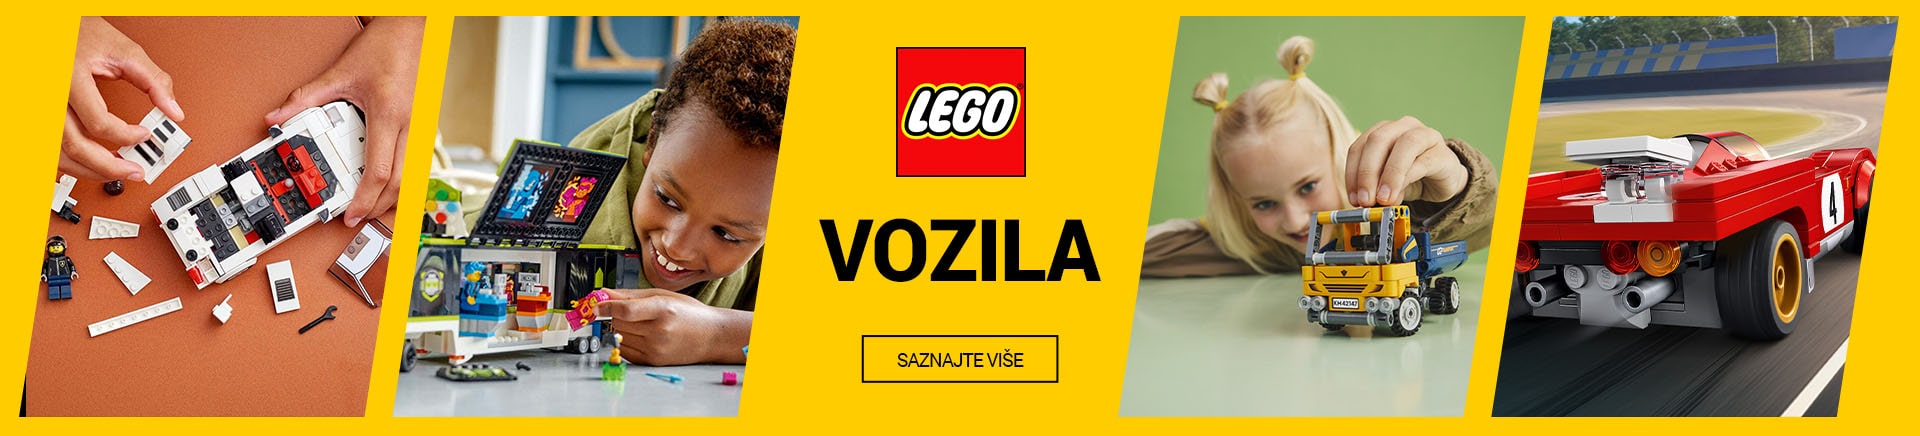 ME Lego VOZILA WIDESCREEN 1920 X 436-min-min.jpg